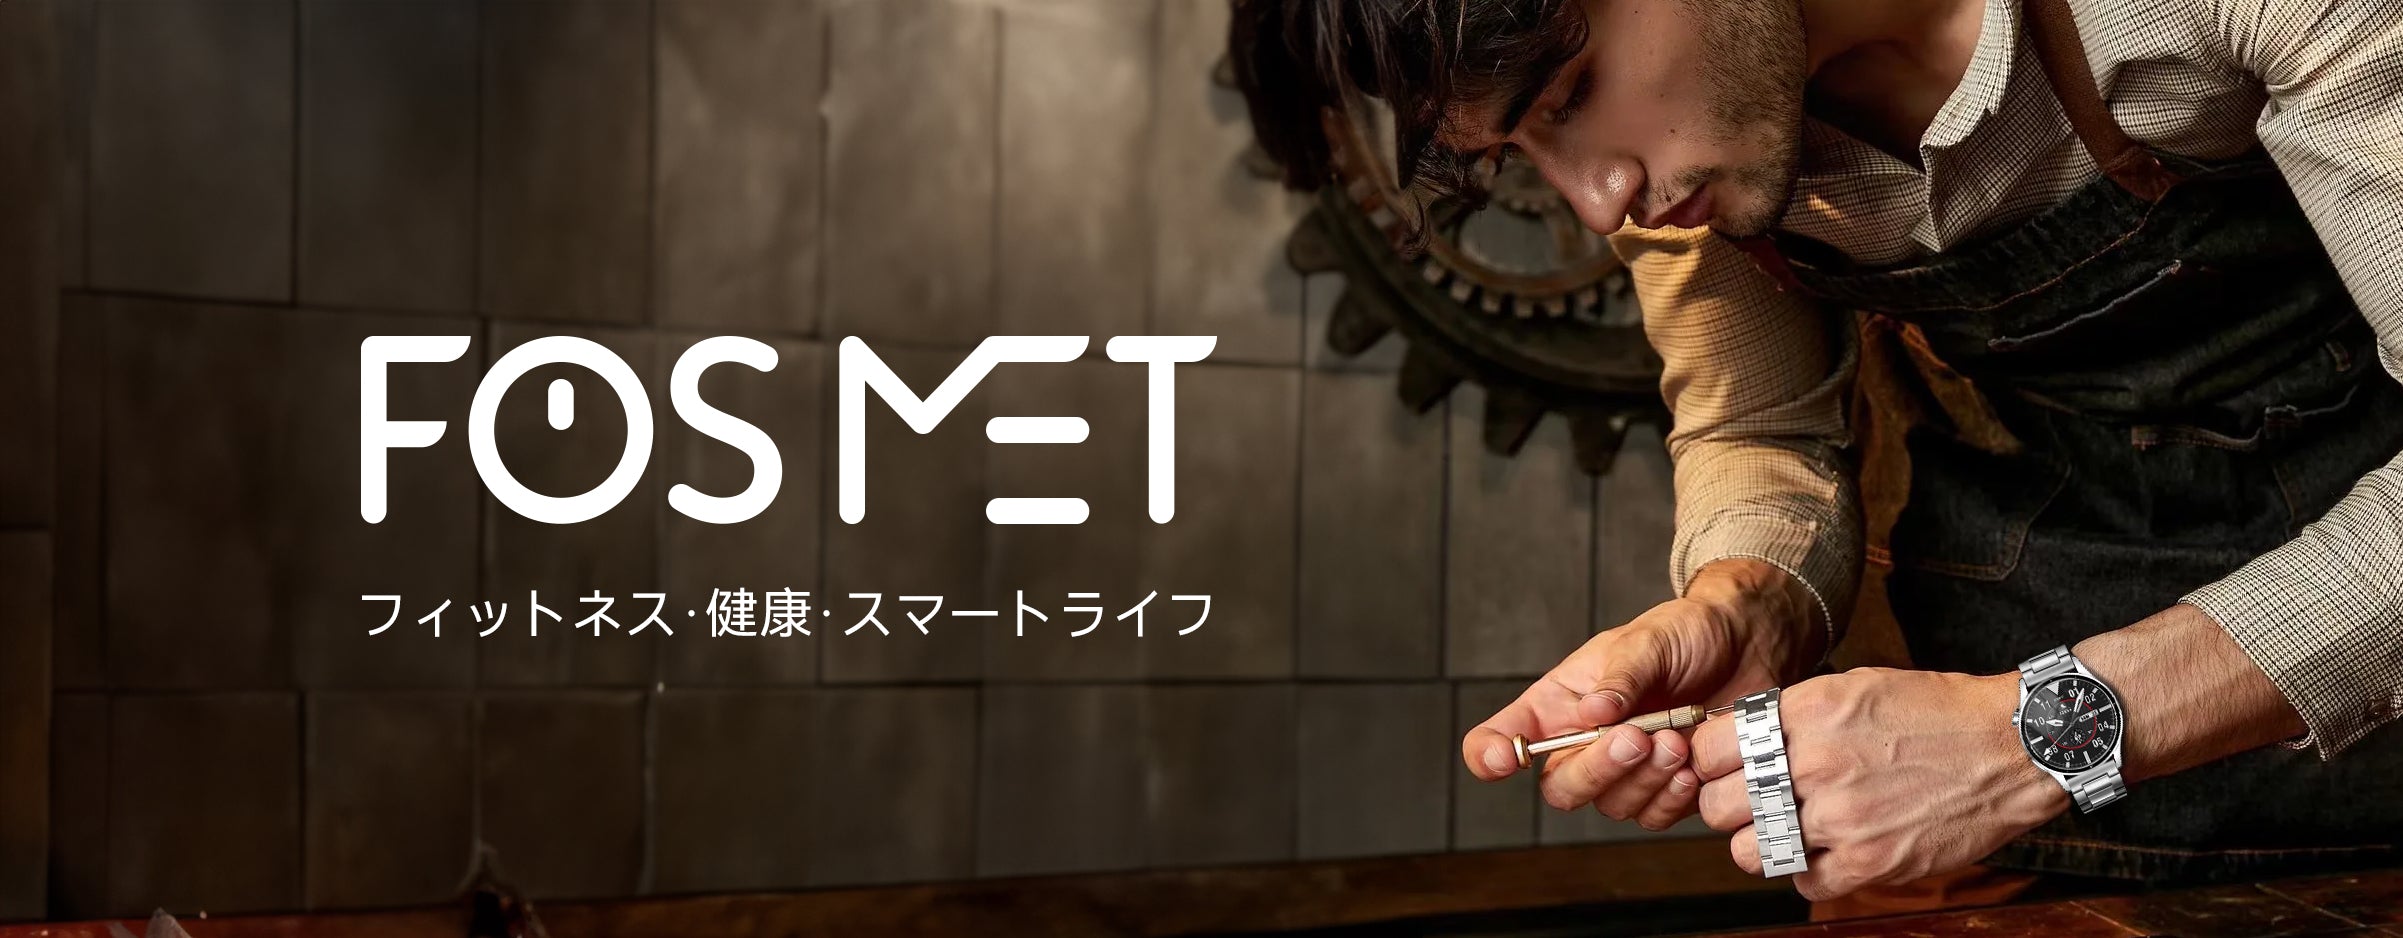 FOSMET (フォスメット) Japan公式サイト